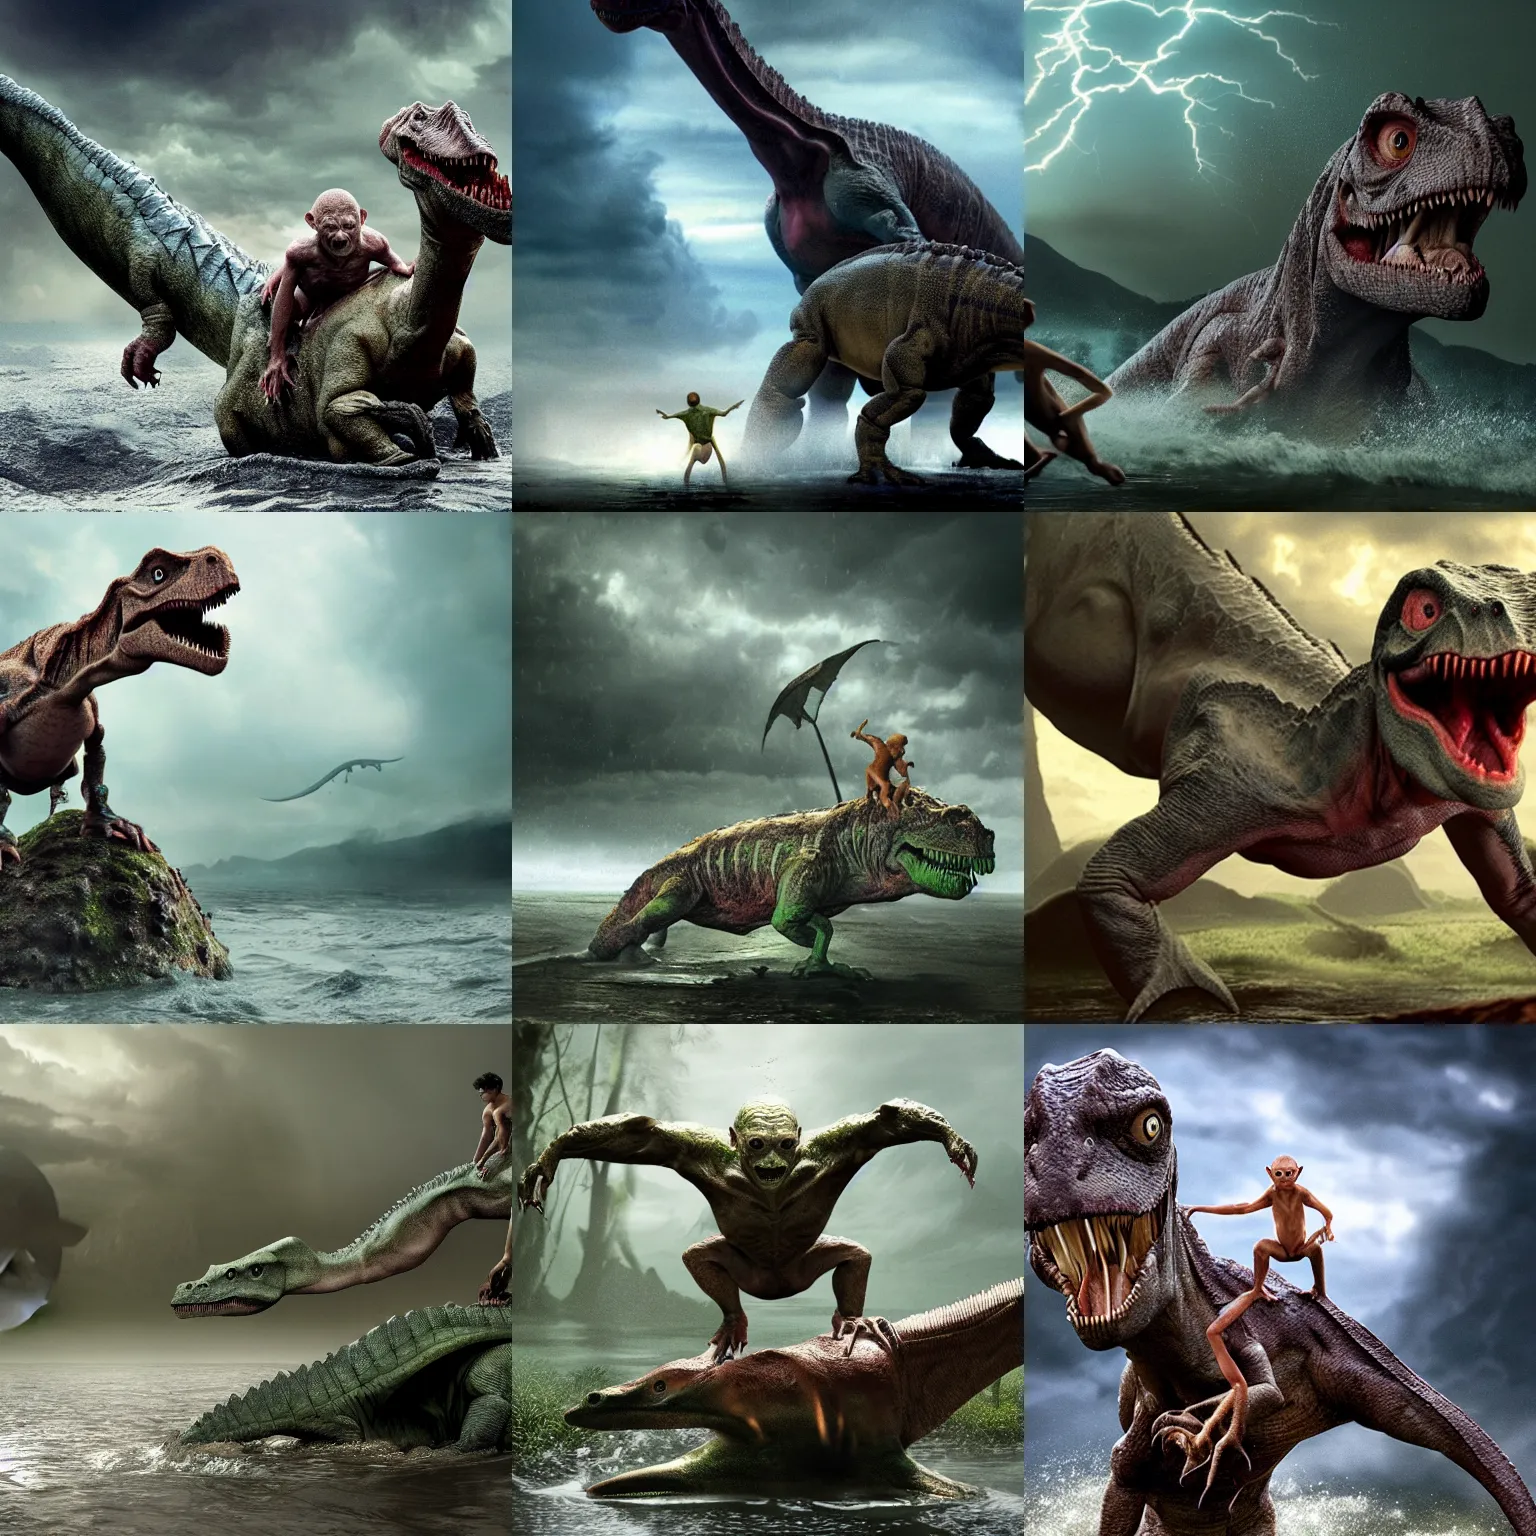 Prompt: Gollum riding dinosaur in trunderstorm, swamp, ultra realistic, 8k